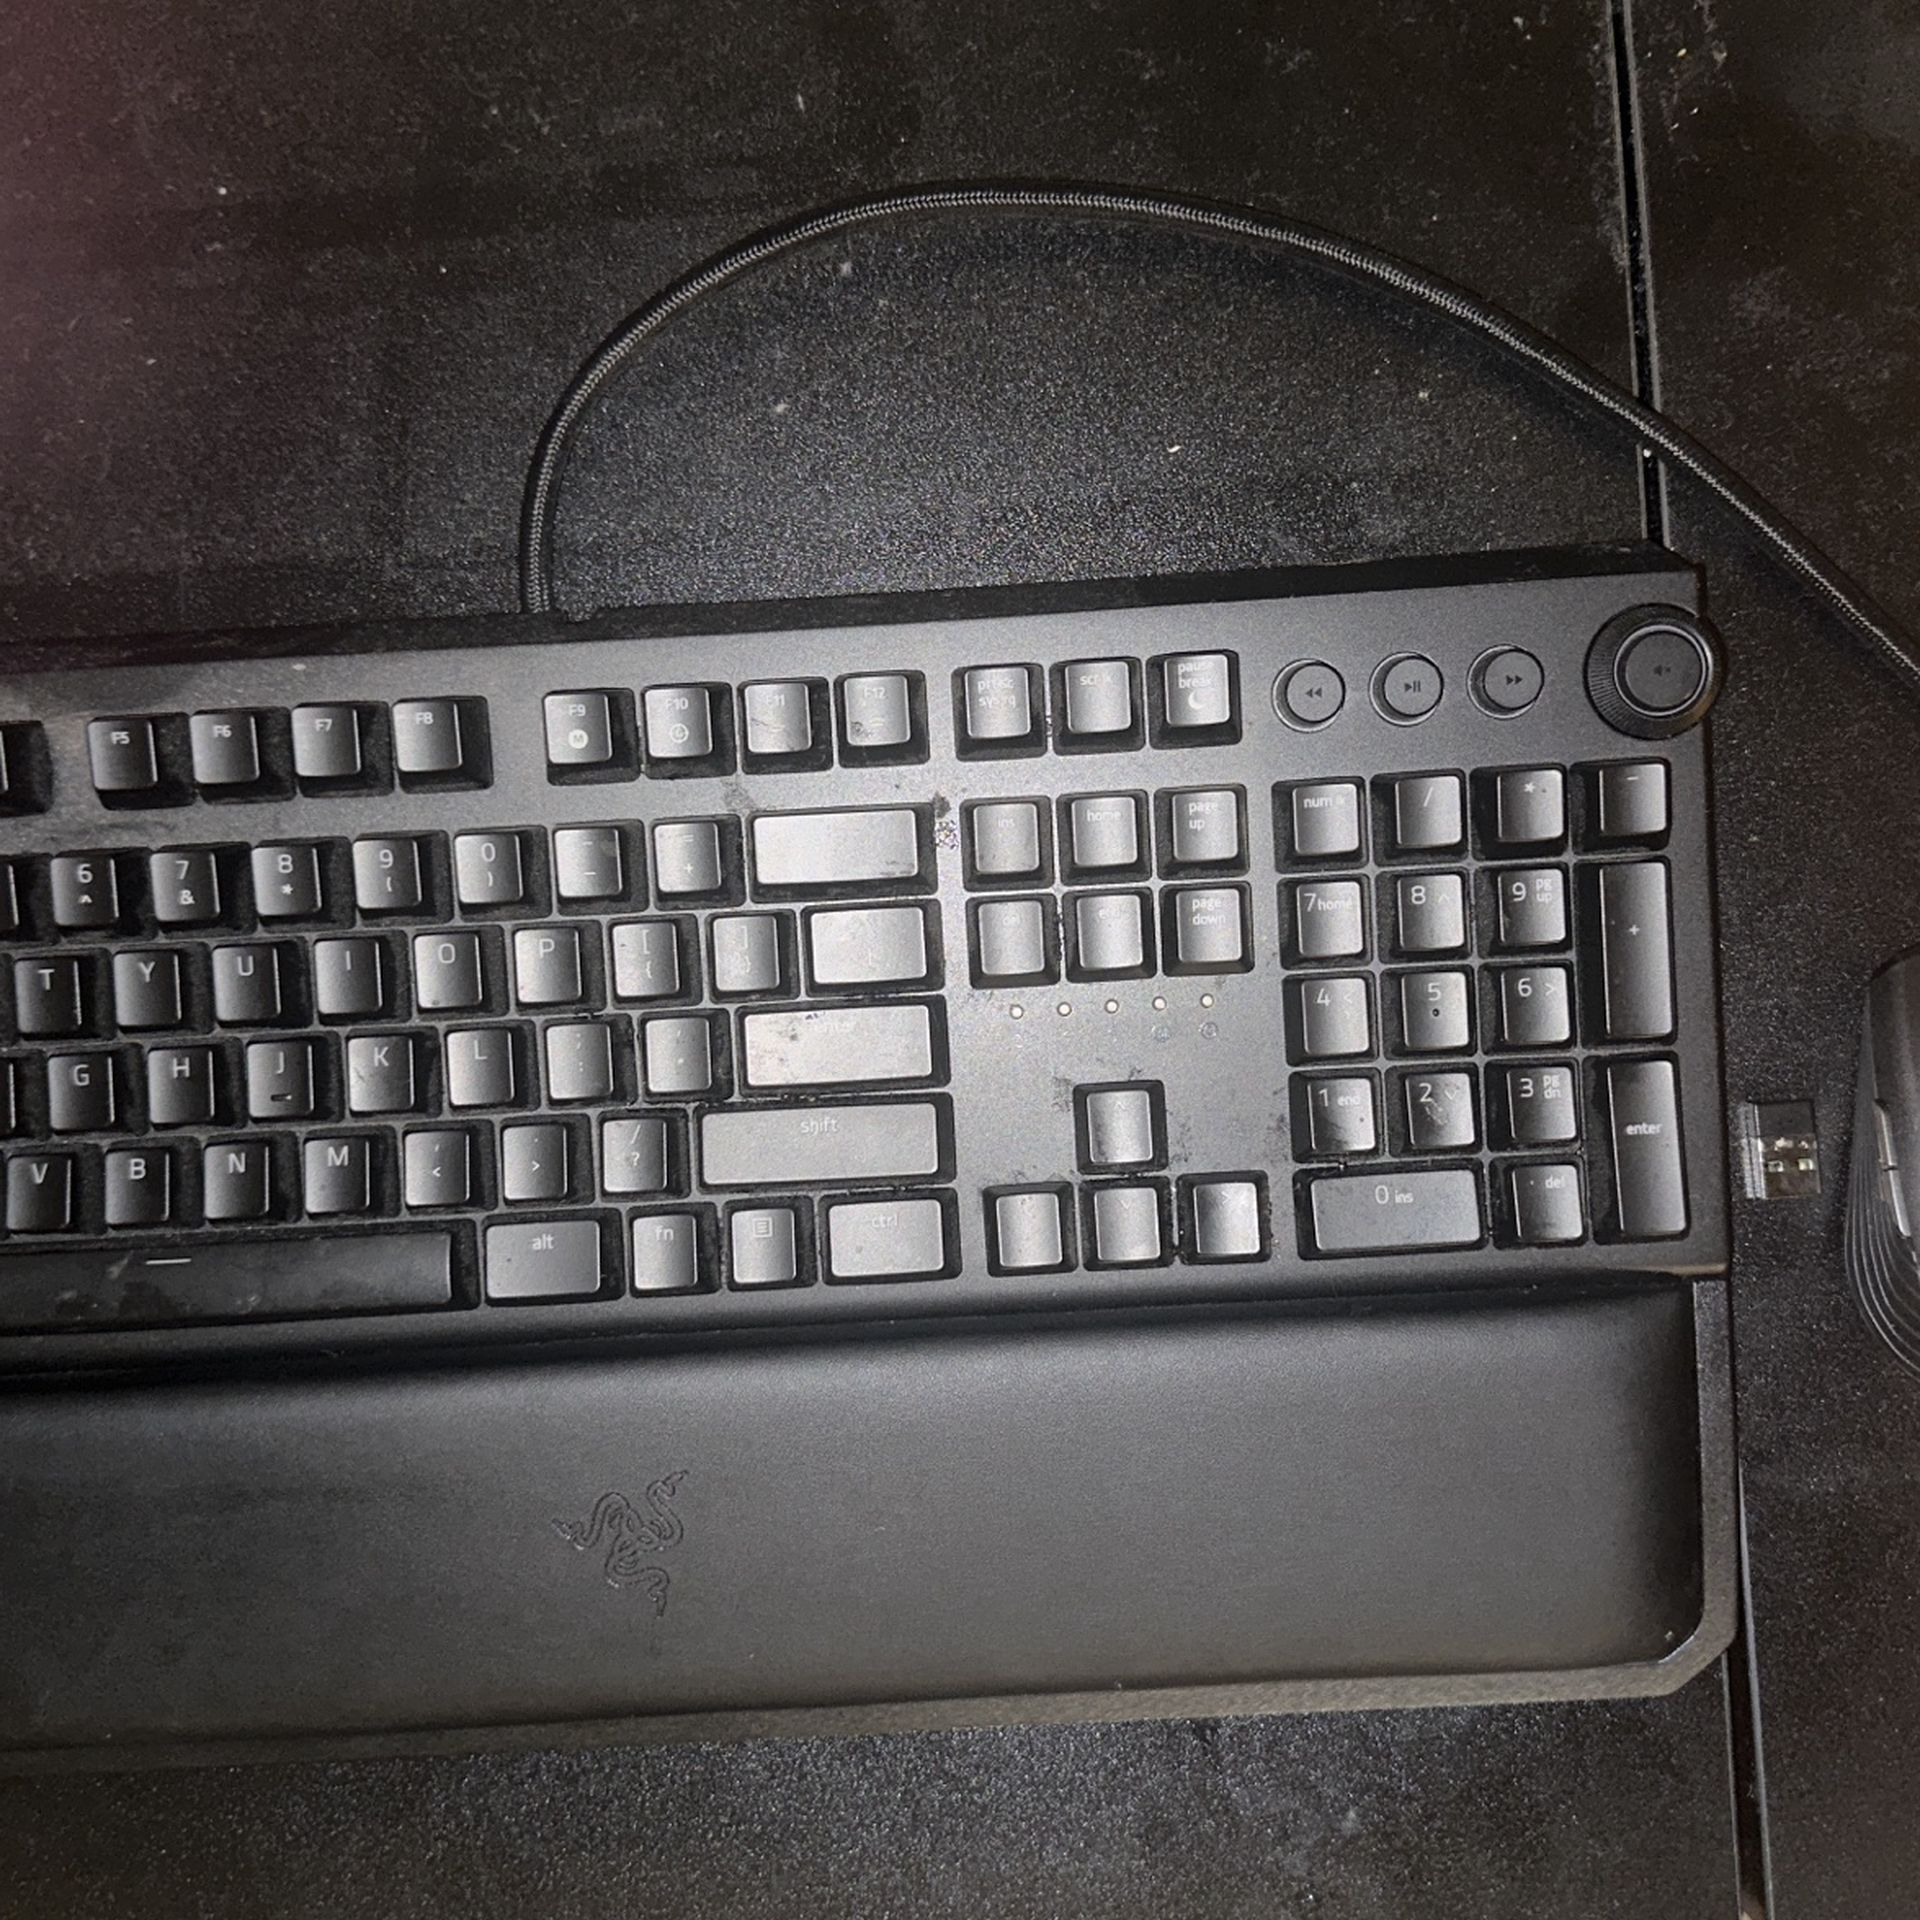 Razor Keyboard And Bluetooth Razor Mouse